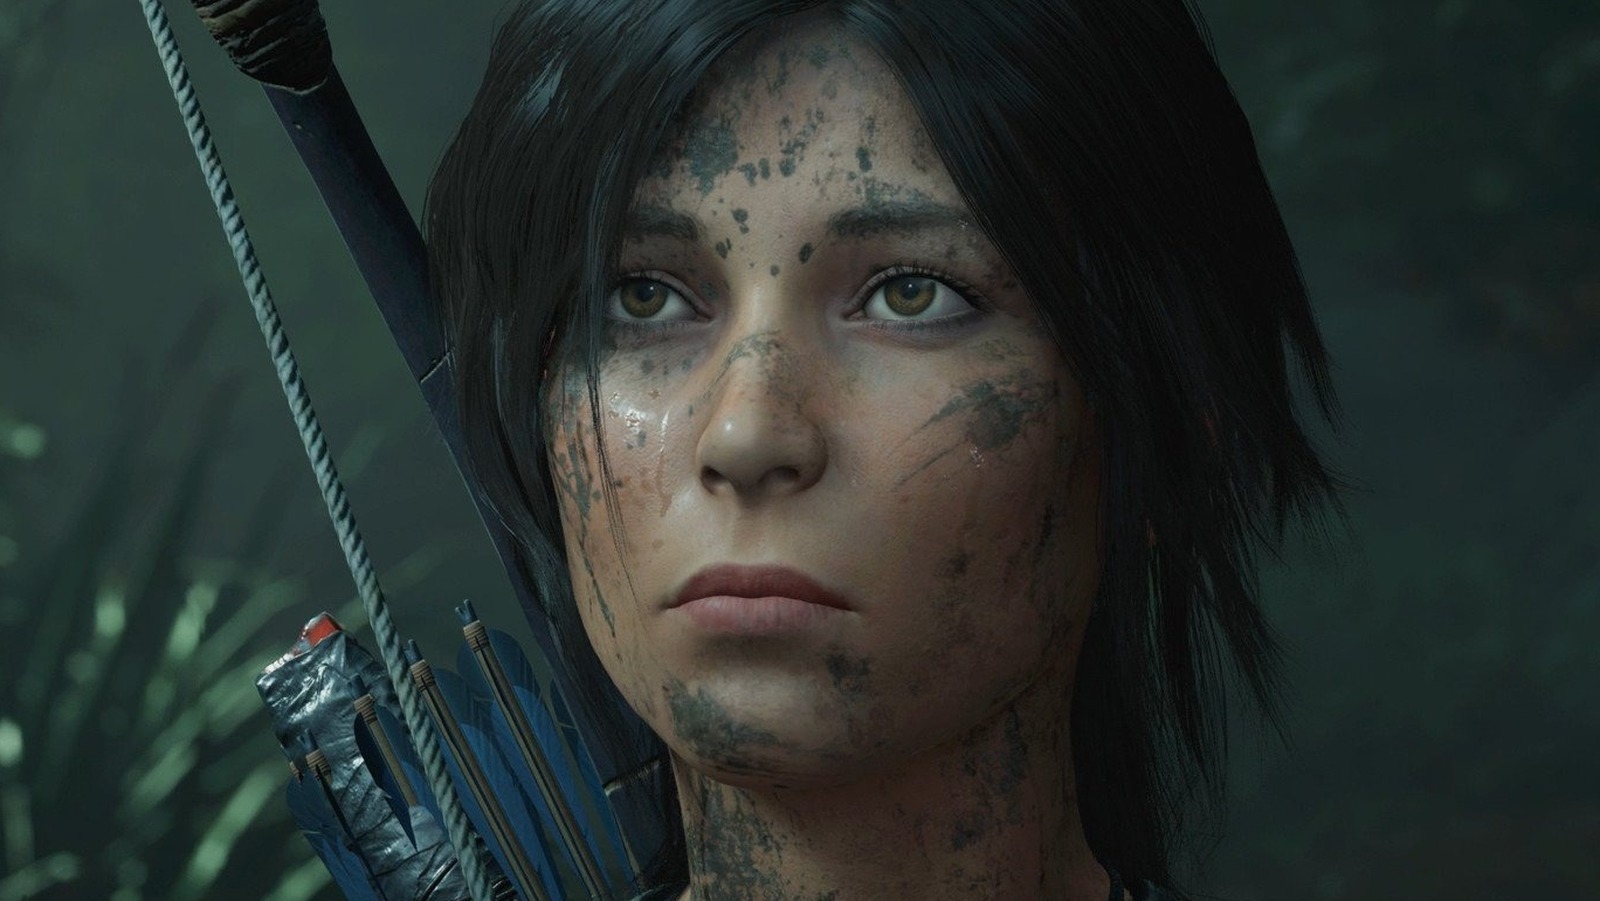 Rise of the Tomb Raider (Video Game 2015) - IMDb